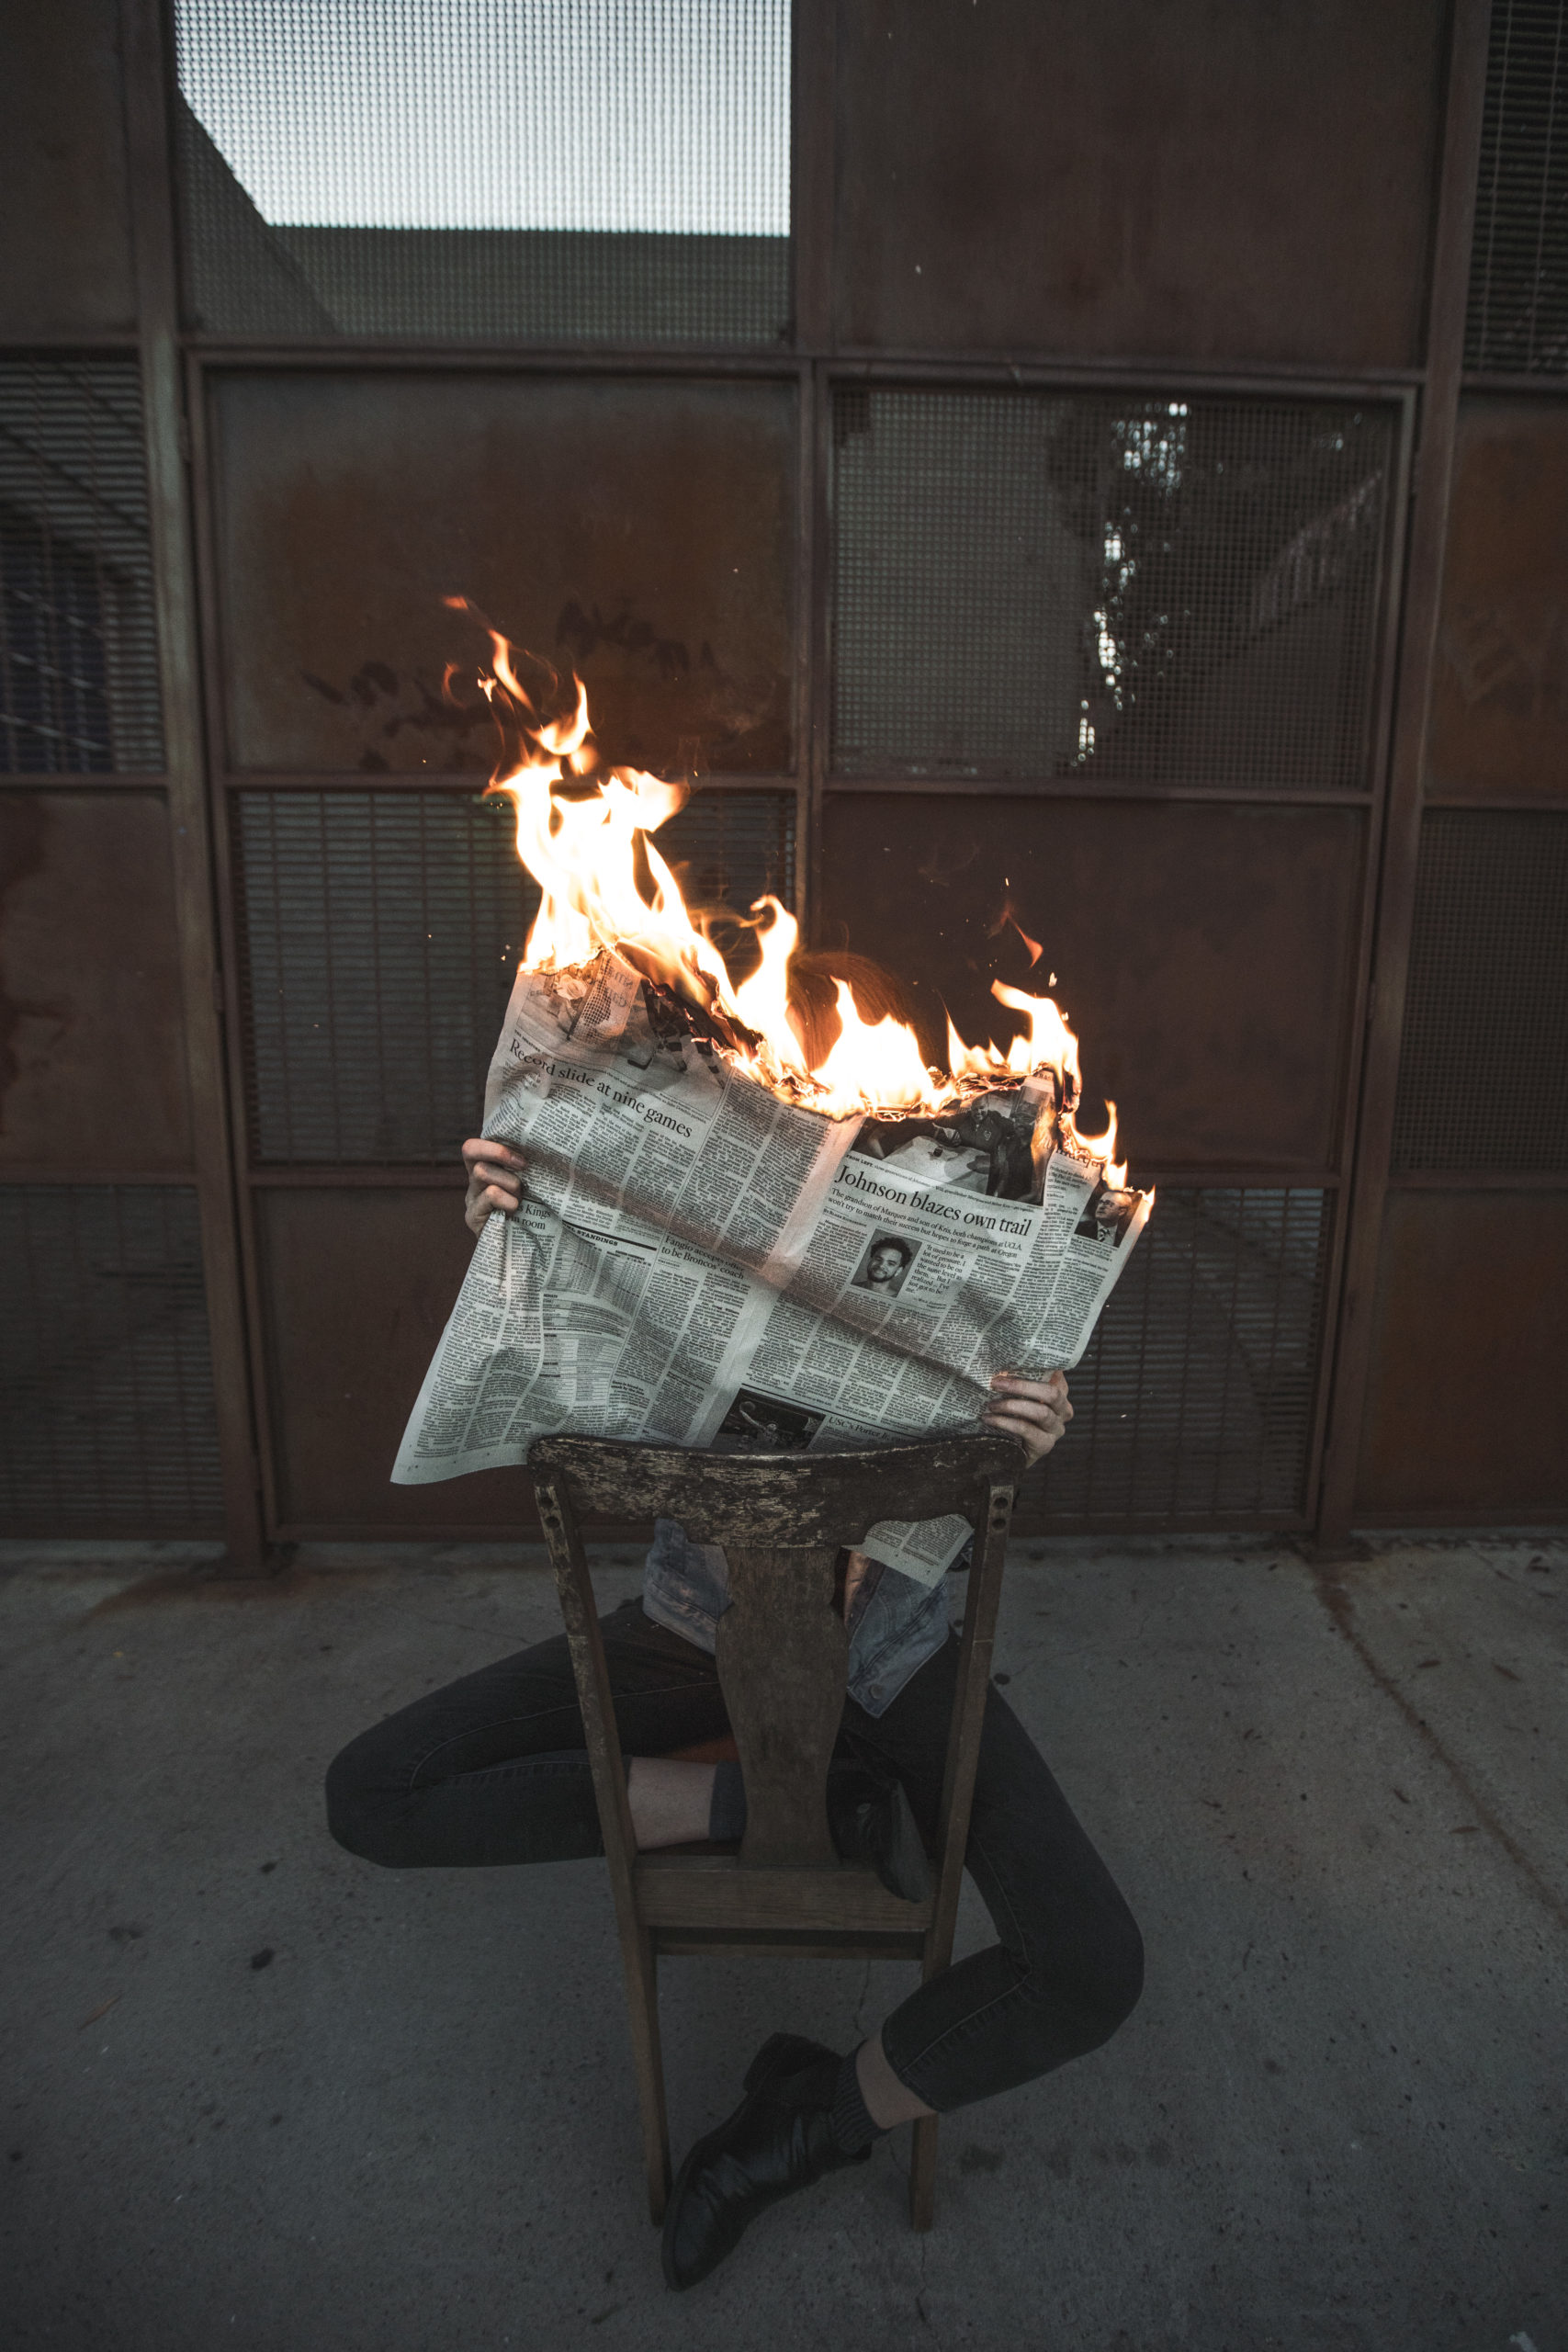 Burning newspaper